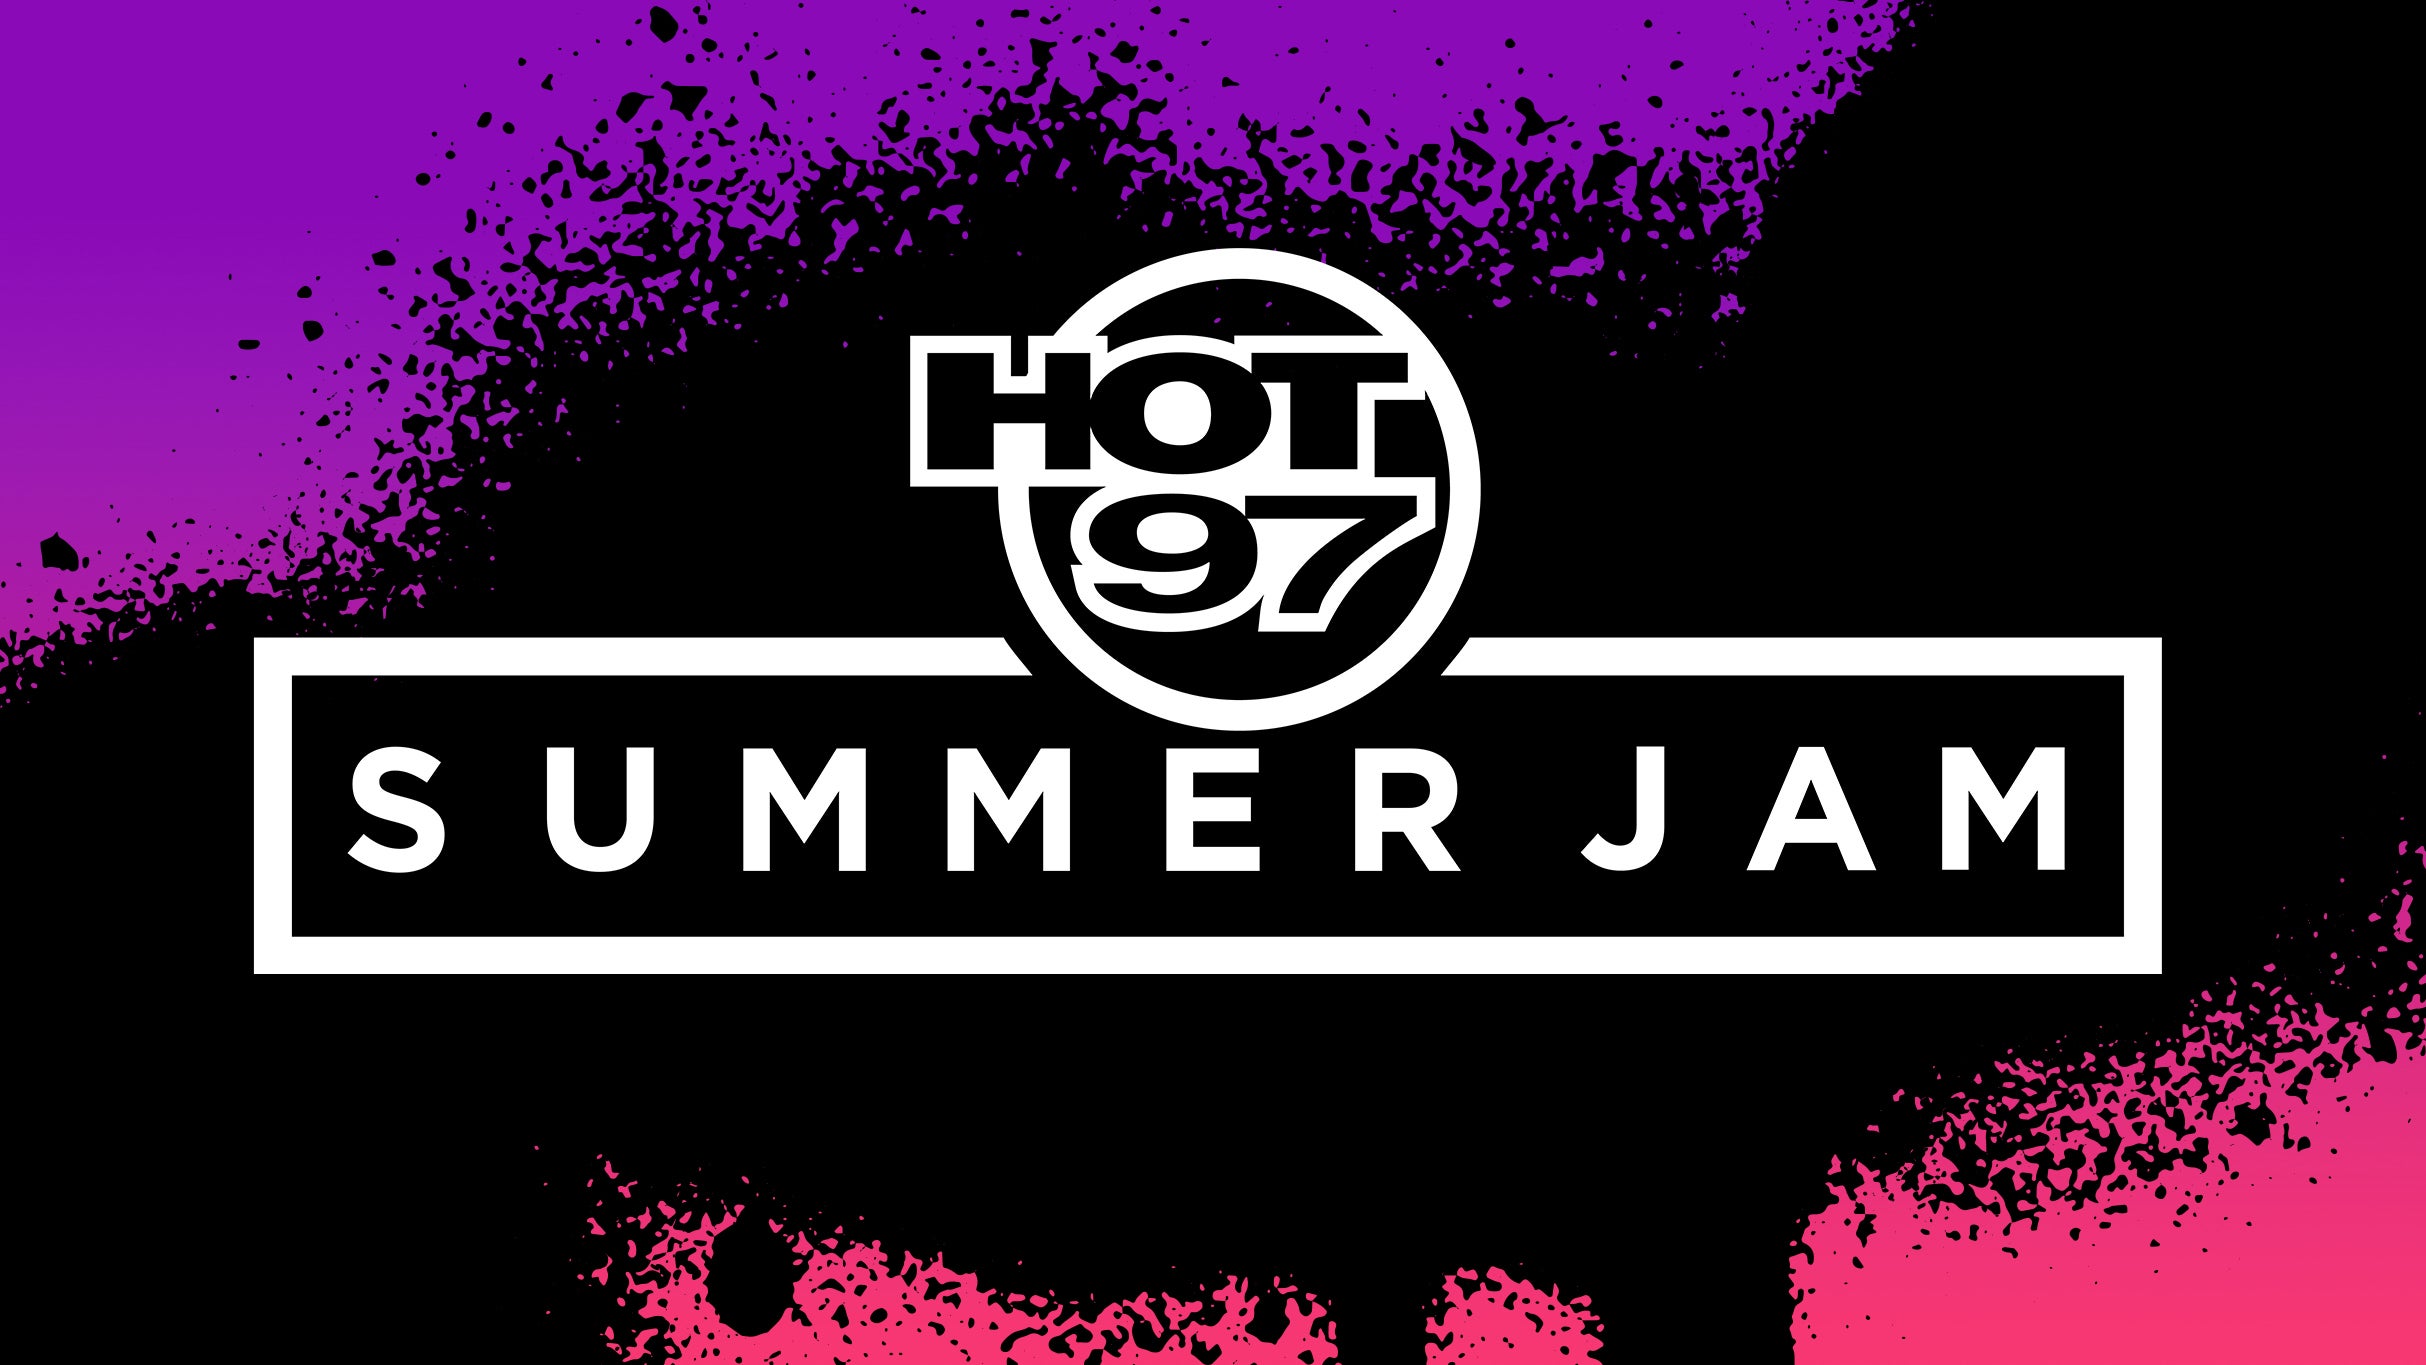 HOT 97 Summer Jam in Belmont Park promo photo for Venue presale offer code